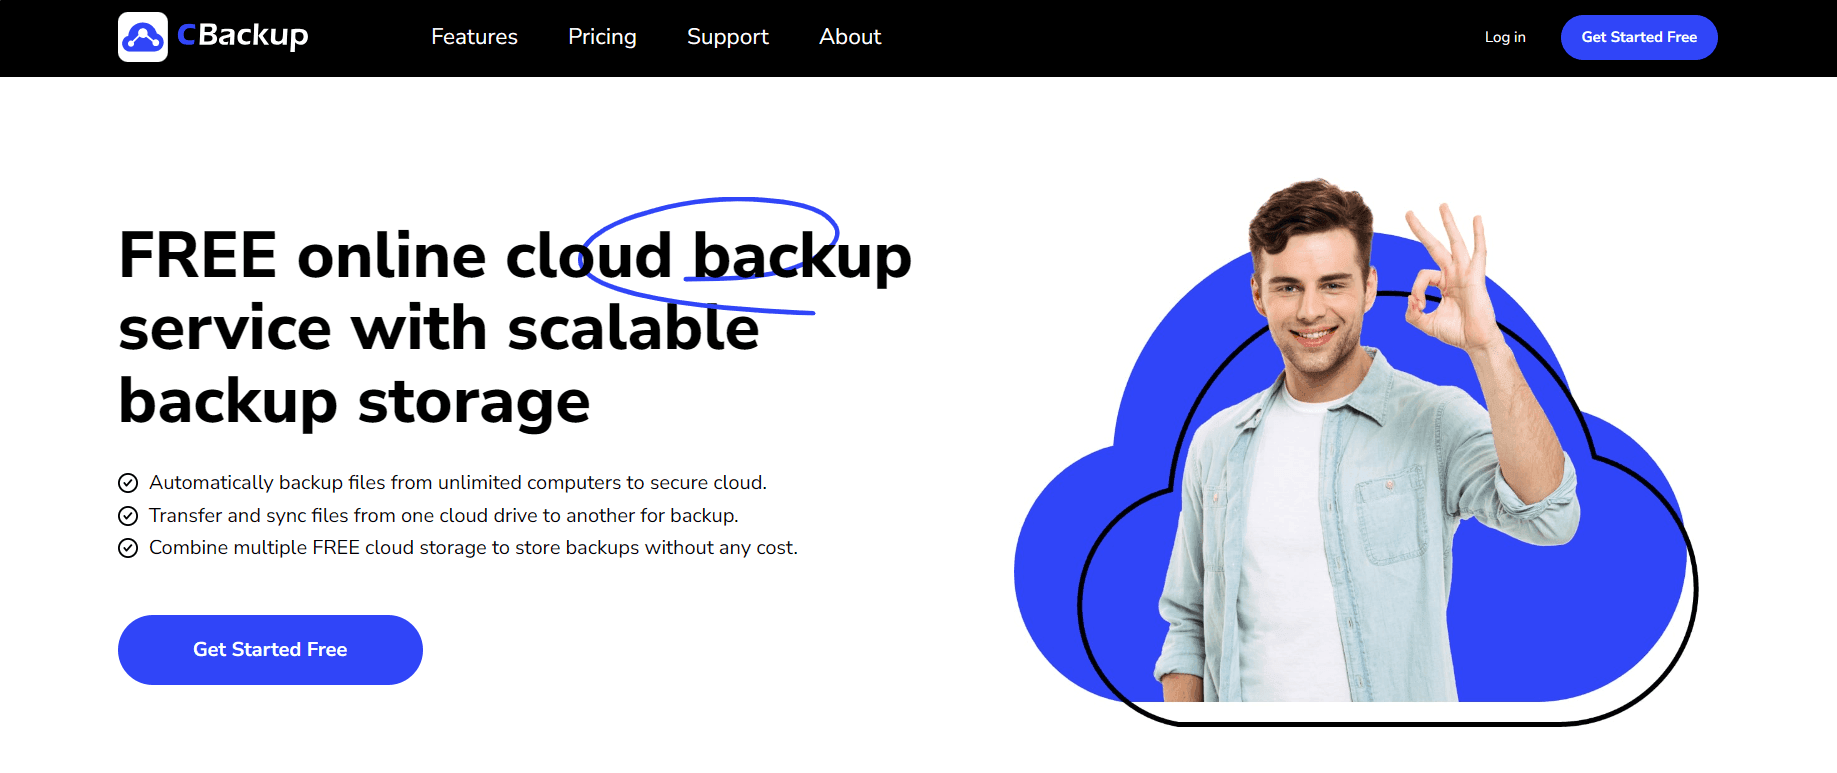 CBackup main page